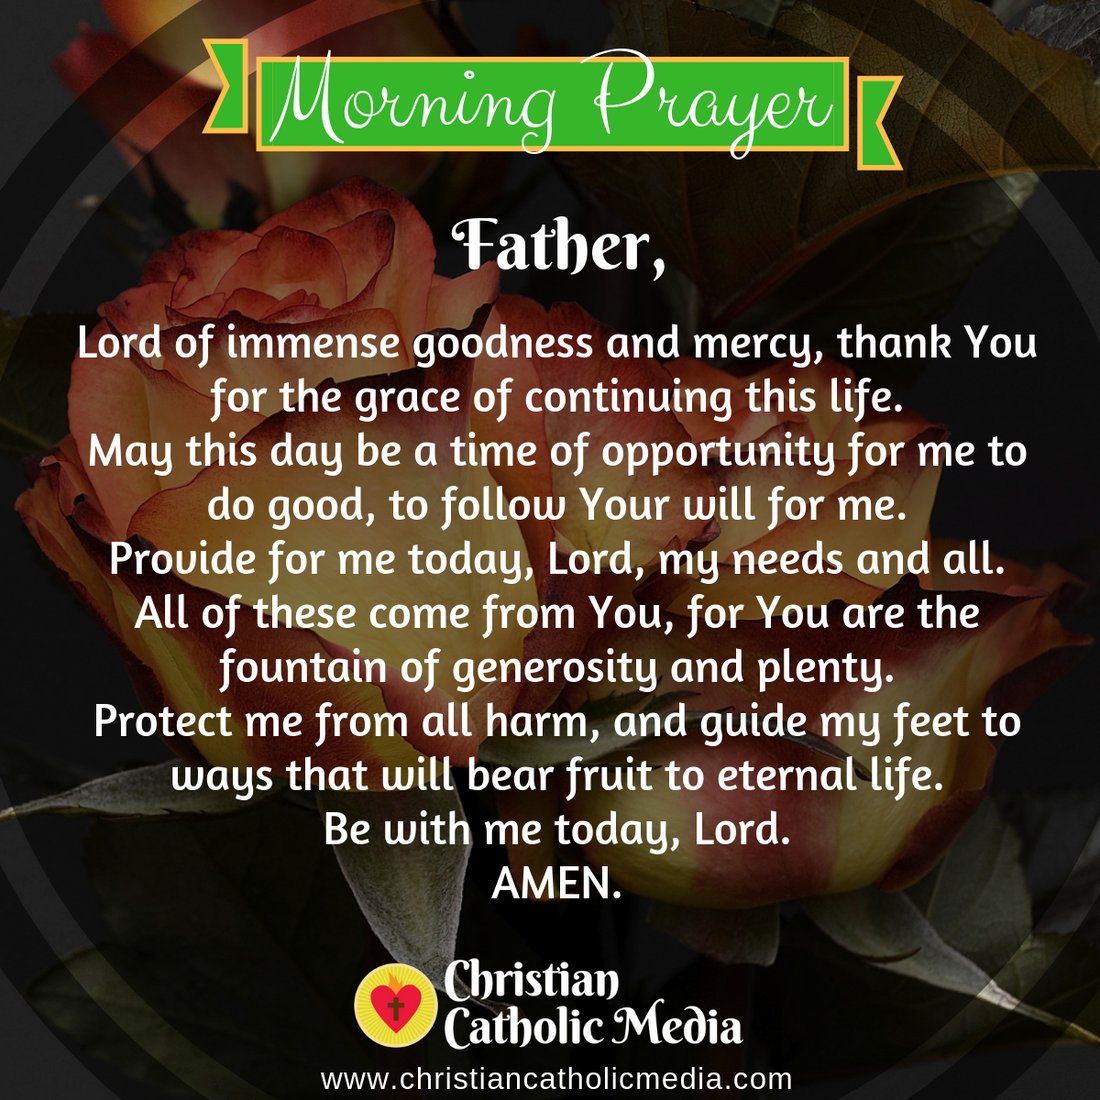 Morning Prayer Catholic Monday 5-18-2020